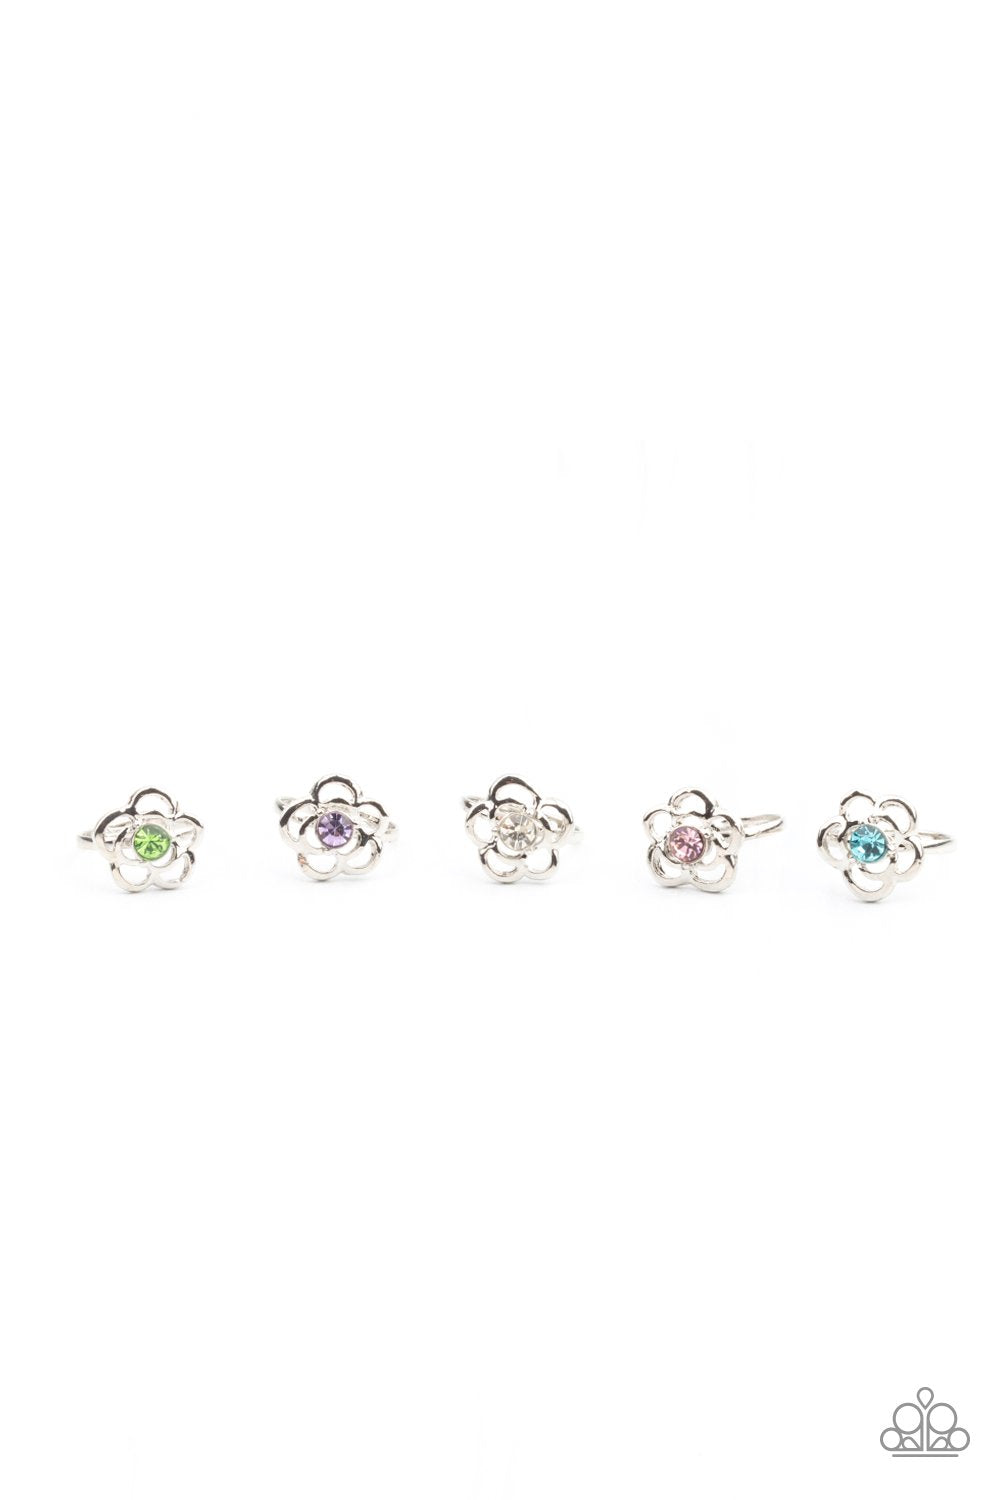 Starlet Shimmer Floral / Rhinestone Rings Pack ♥ Starlet Shimmer Rings ♥ Paparazzi ♥